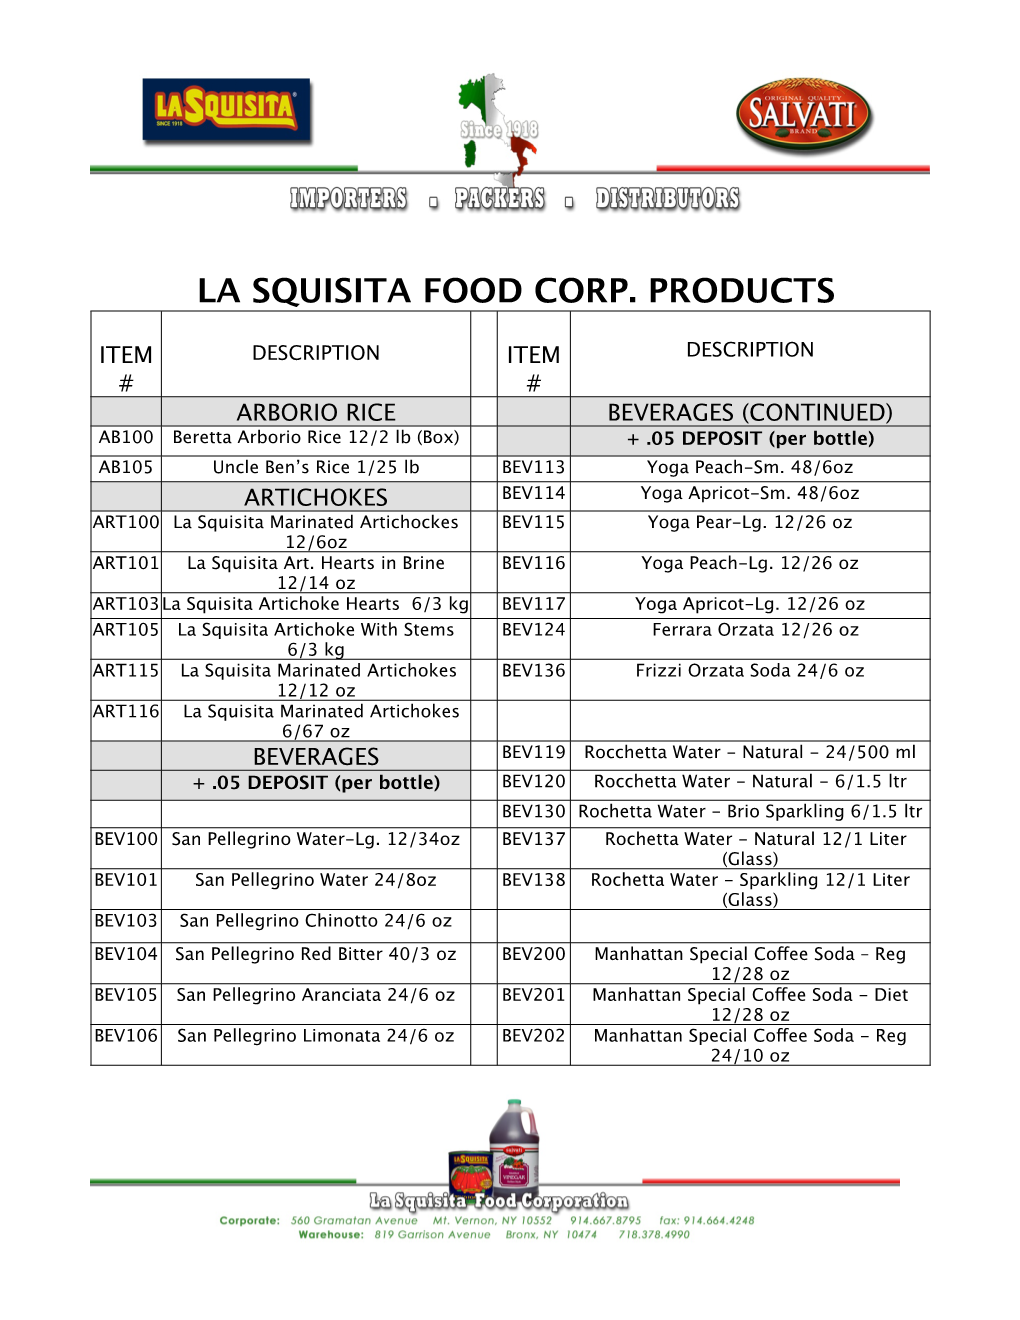 La Squisita Food Corp. Products